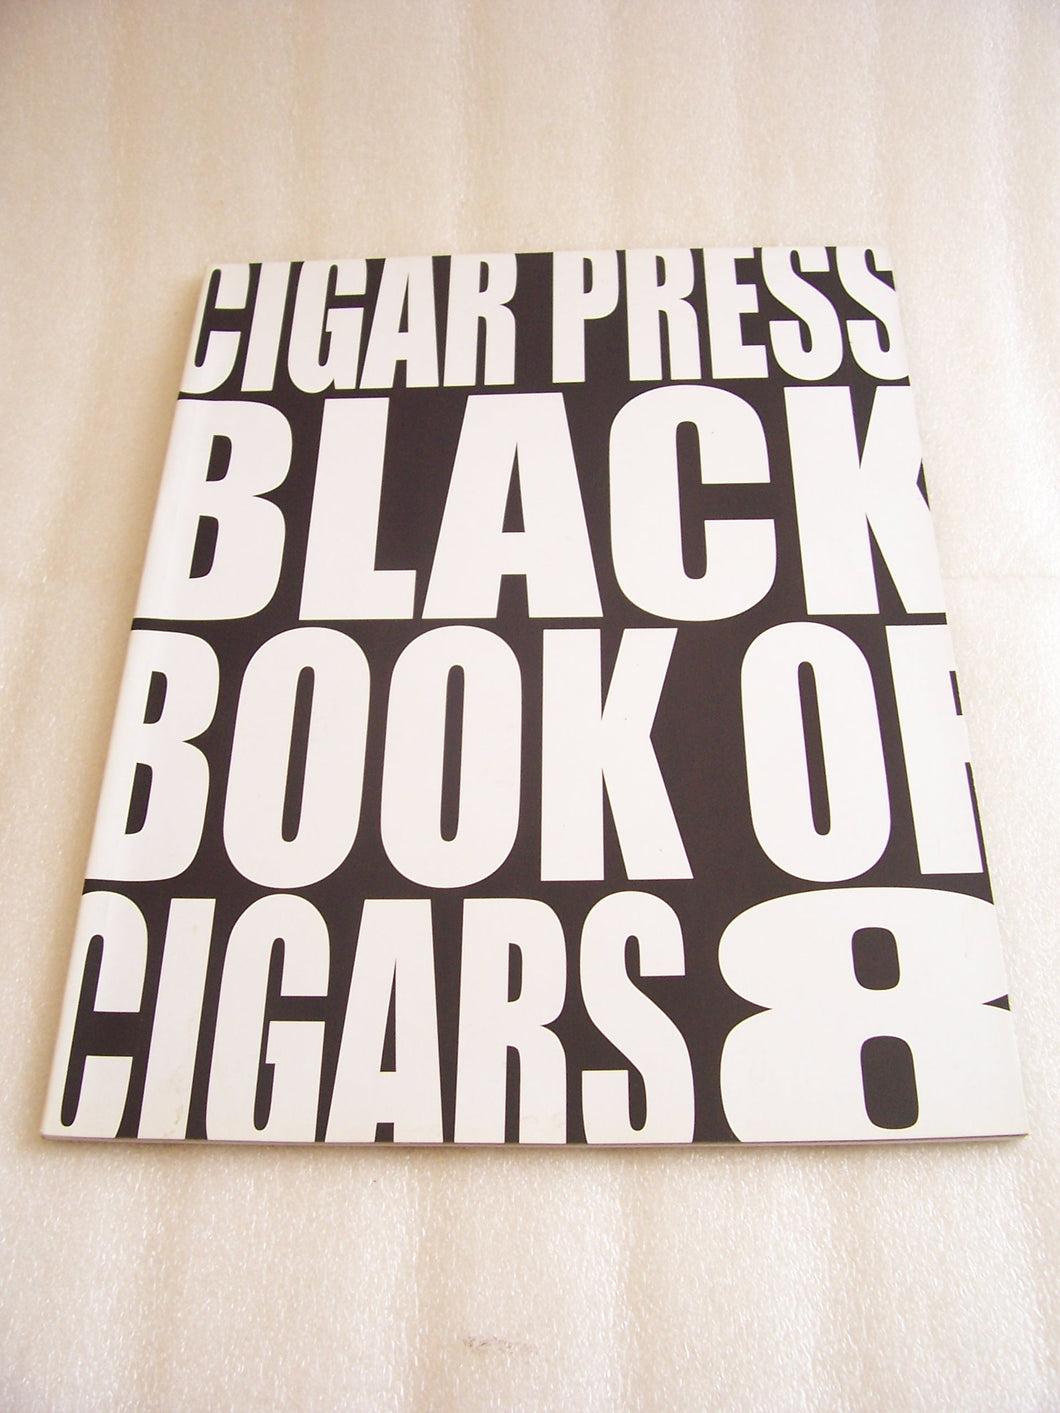 Cigar Press Black Book of Cigars 8 Magazine